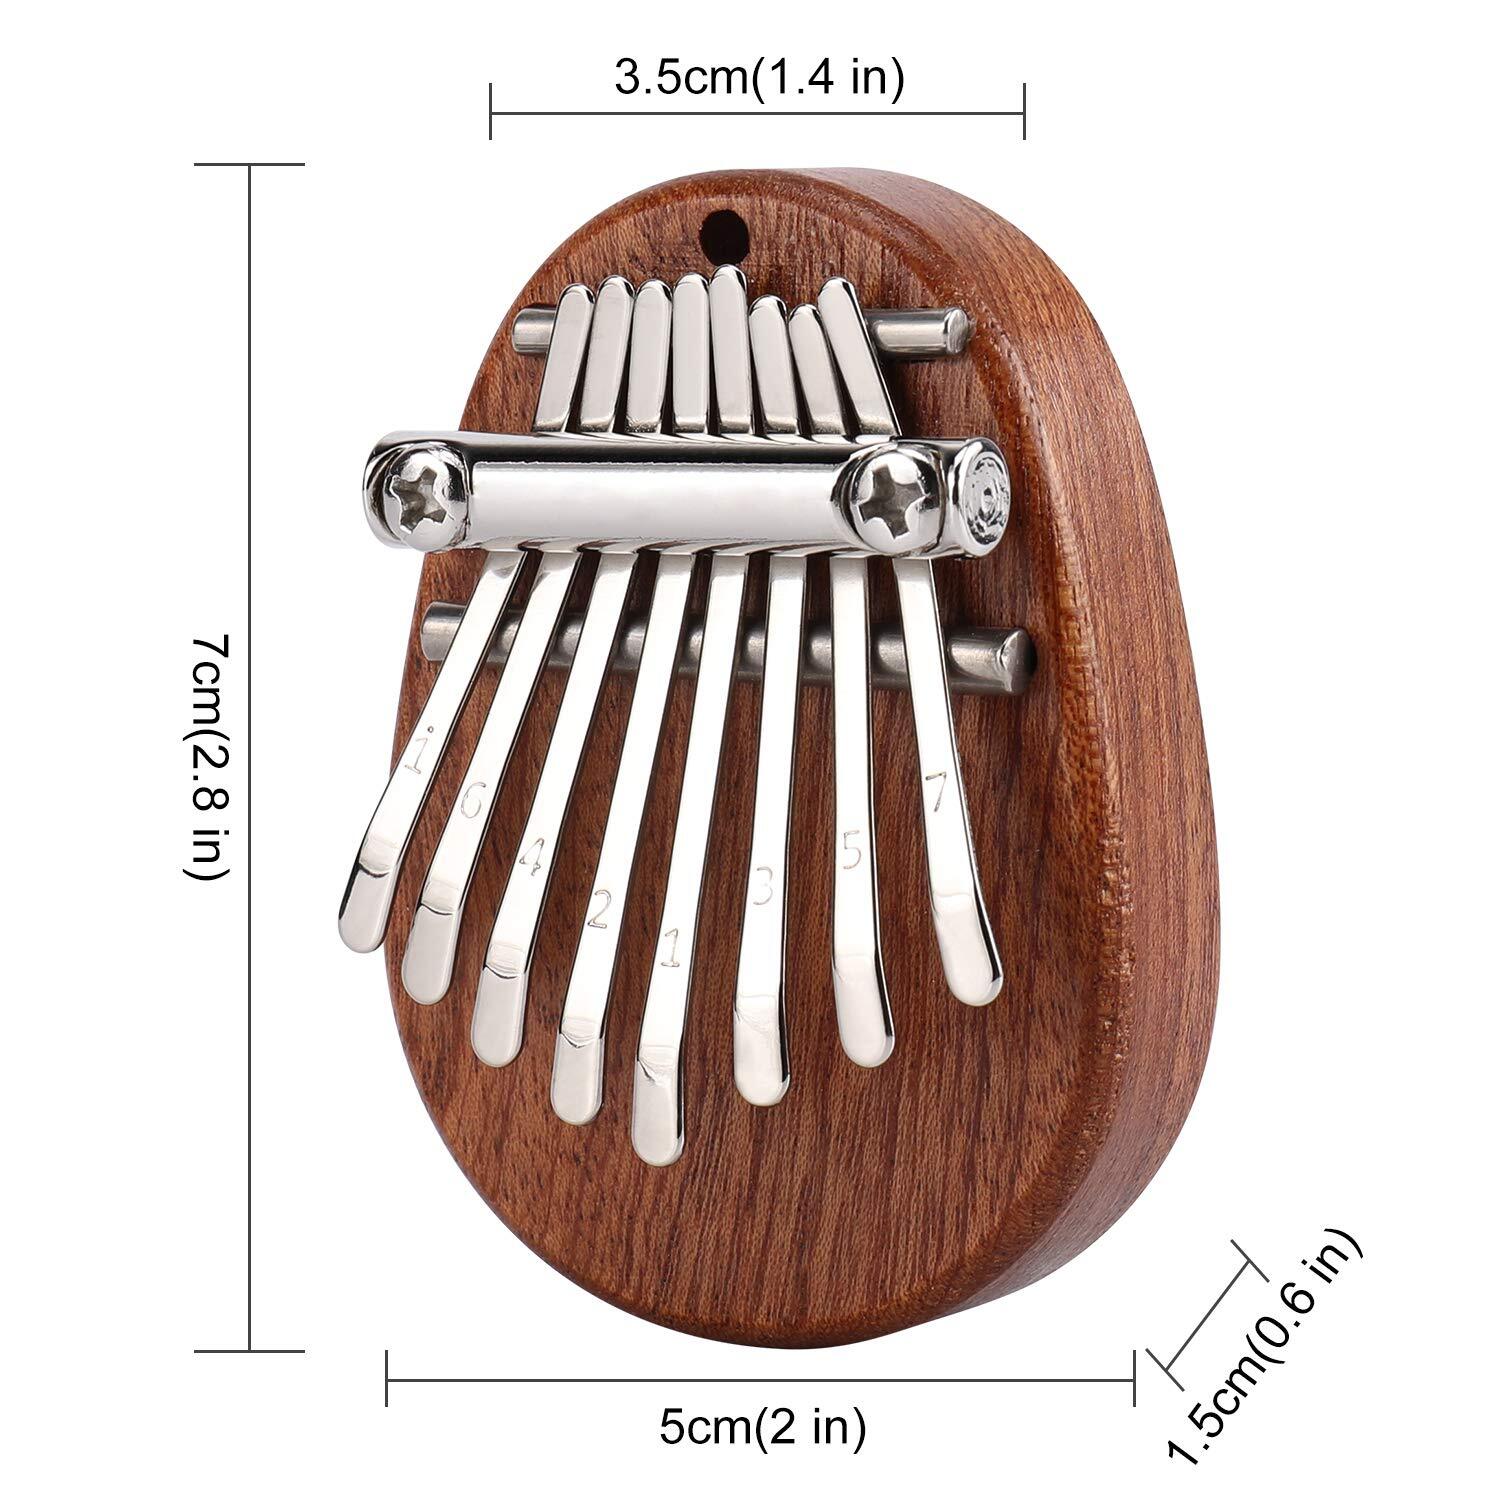 8 Key Portable Crystal&wood Finger Piano